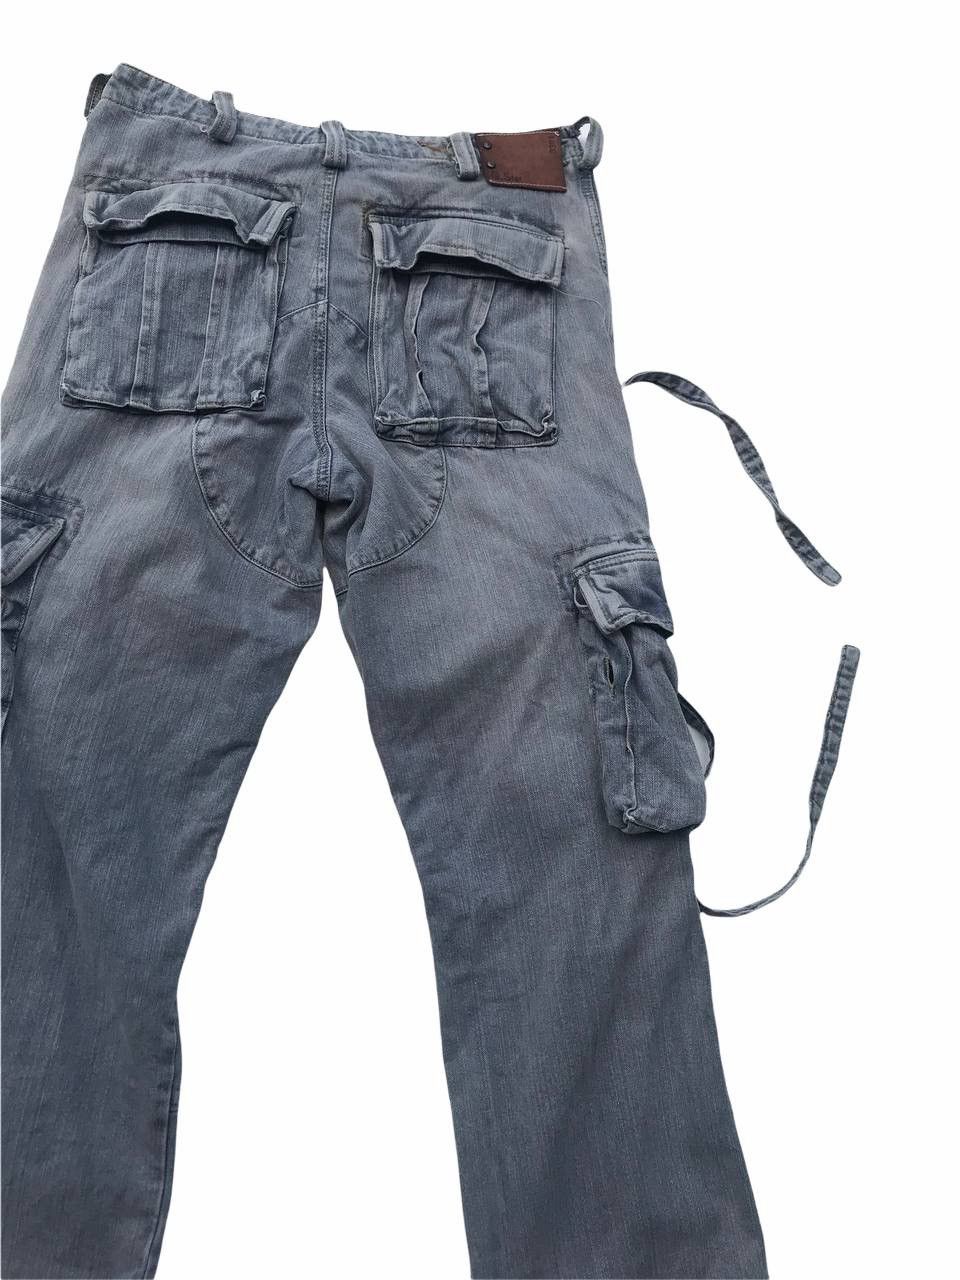 Gstar Gstar Denim Cargo Multipocket Streetwear Fashion Pants Size US 31 - 10 Thumbnail